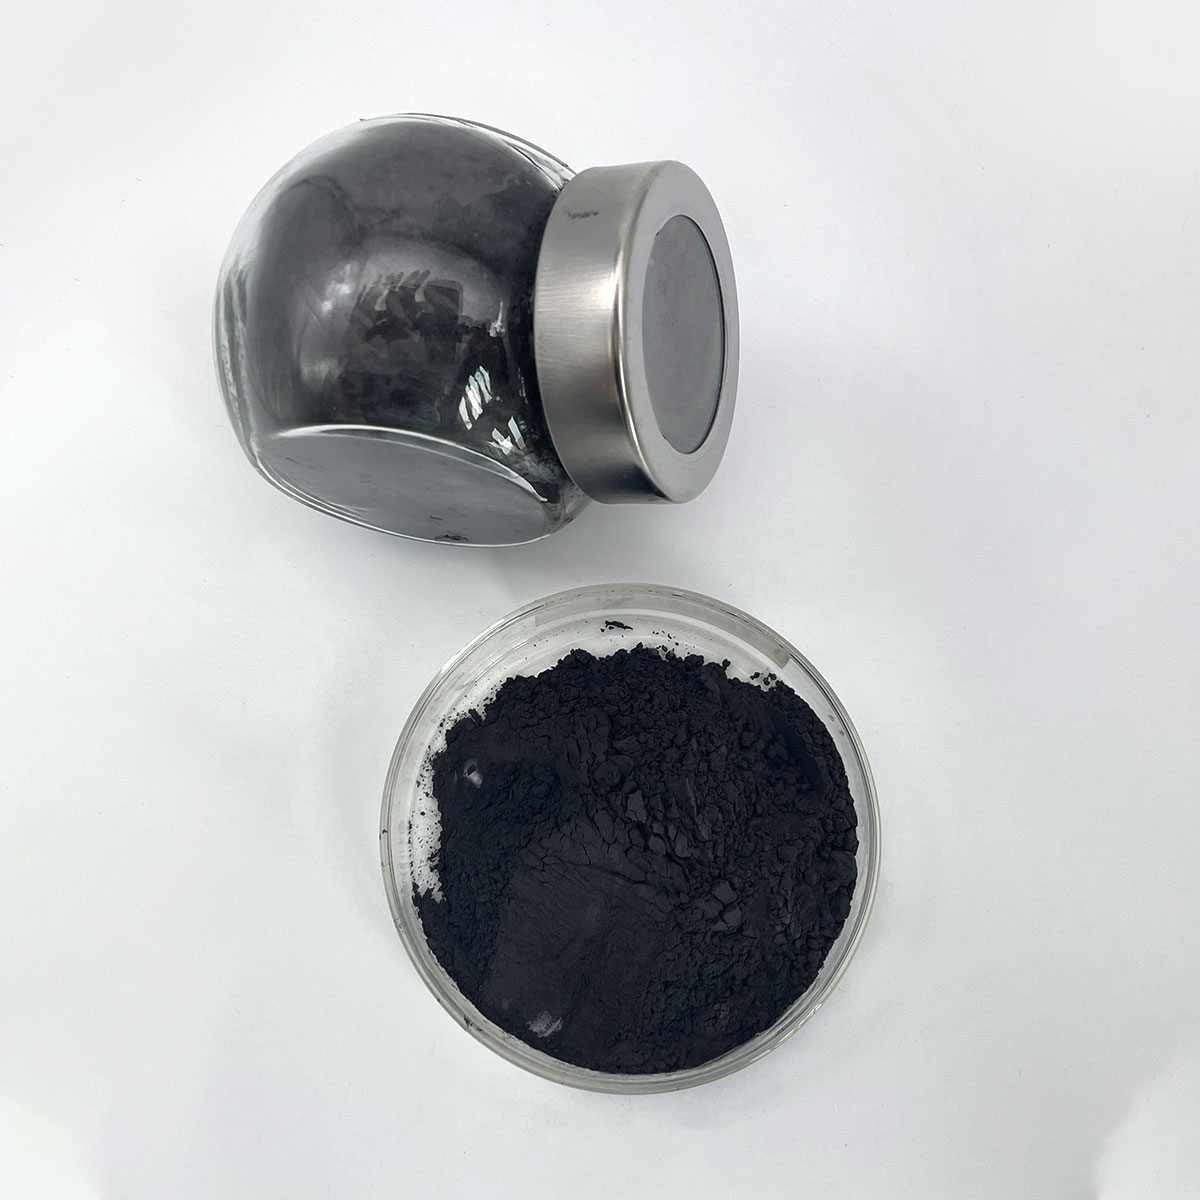 High purity WC powder SFTC spherical fused tungsten carbide powder 